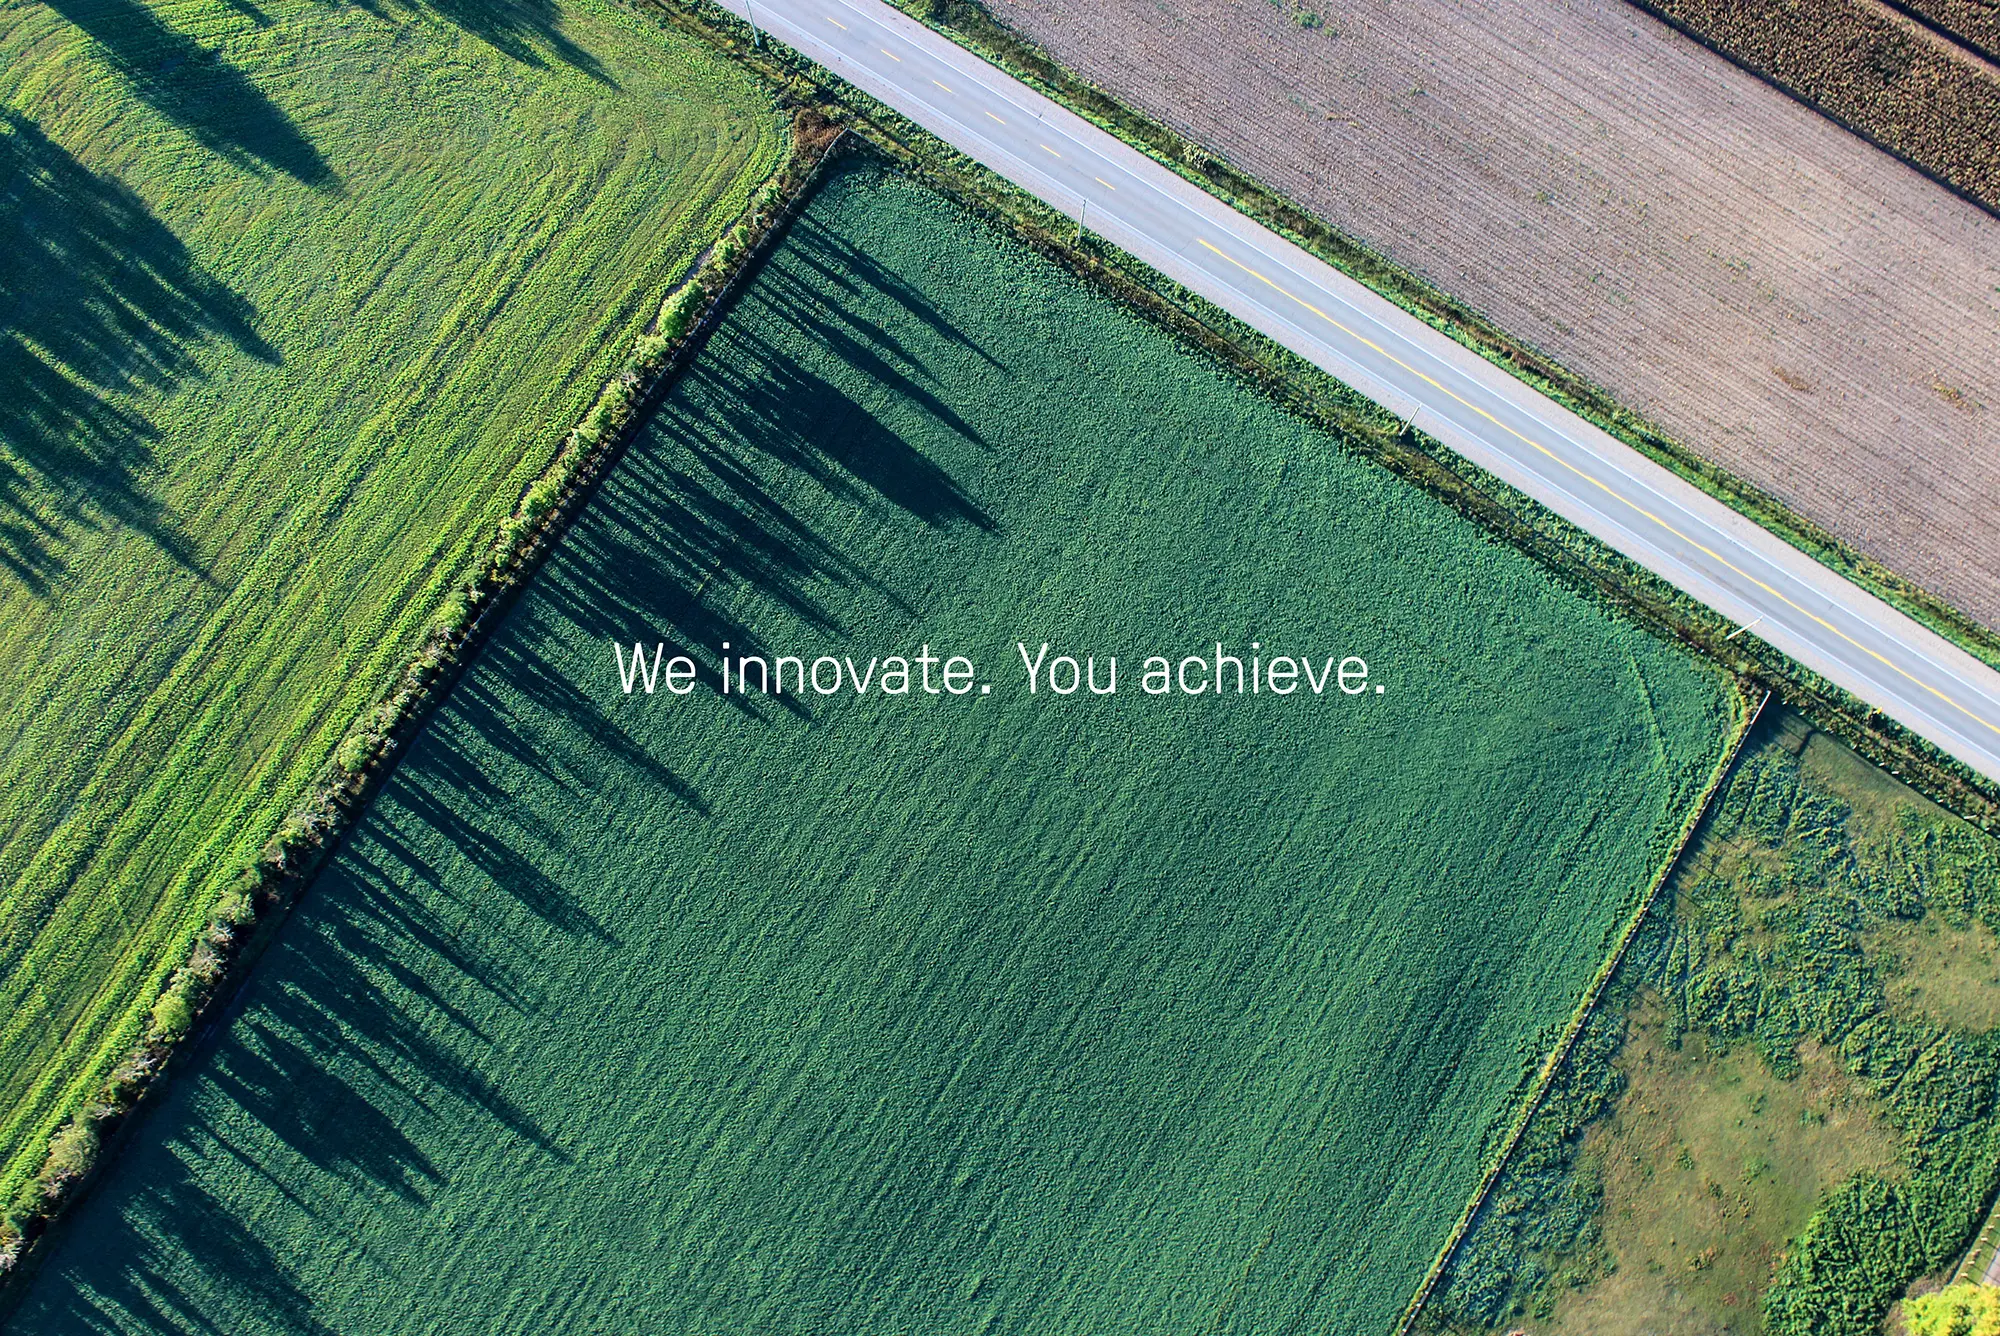 We innovate. You achieve.